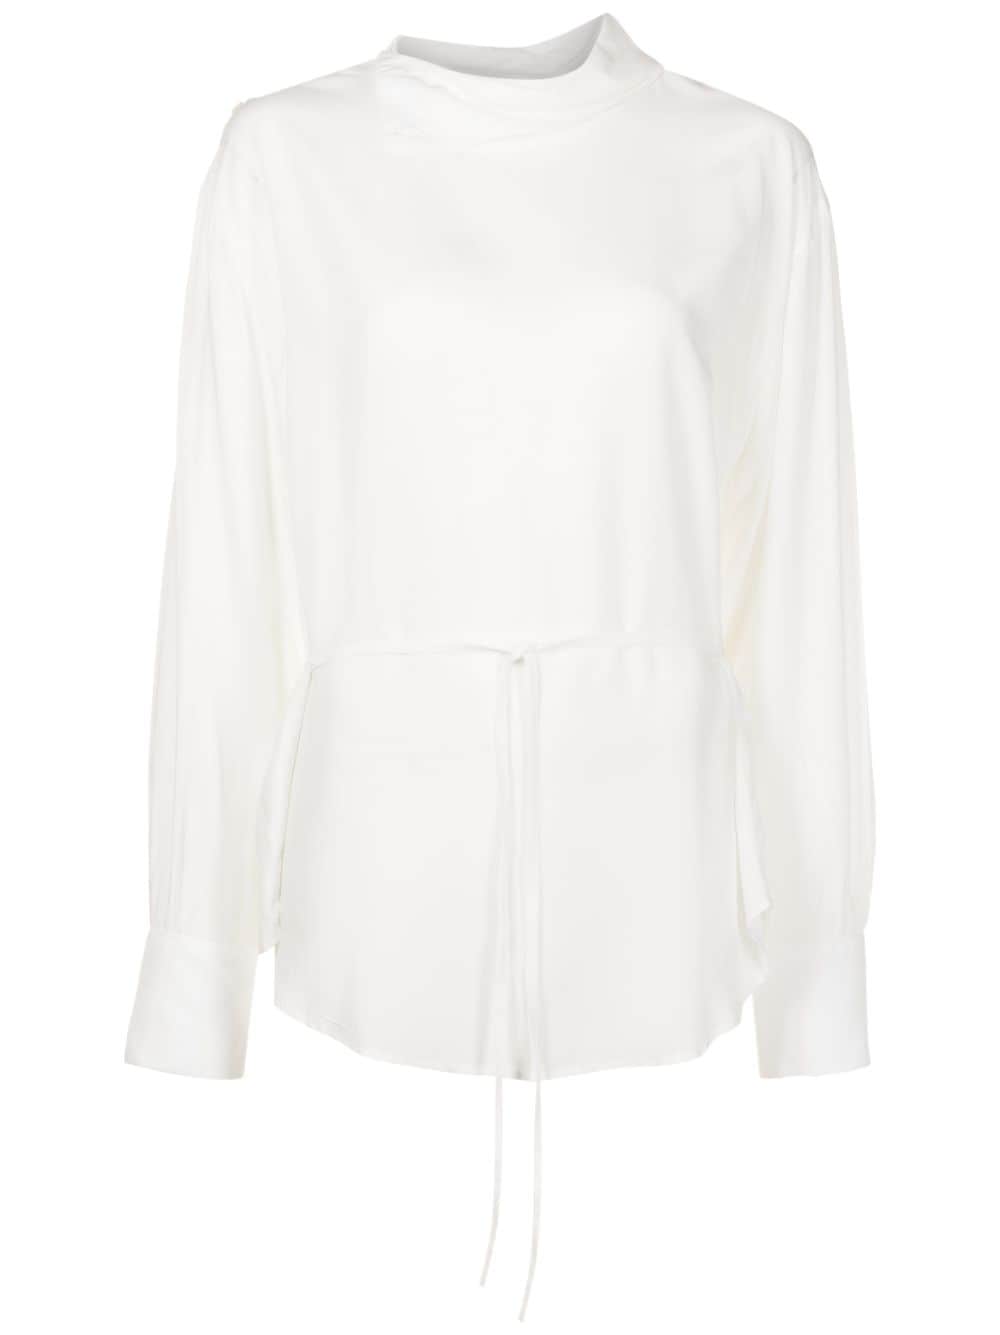 Uma | Raquel Davidowicz long-sleeve blouse - White von Uma | Raquel Davidowicz